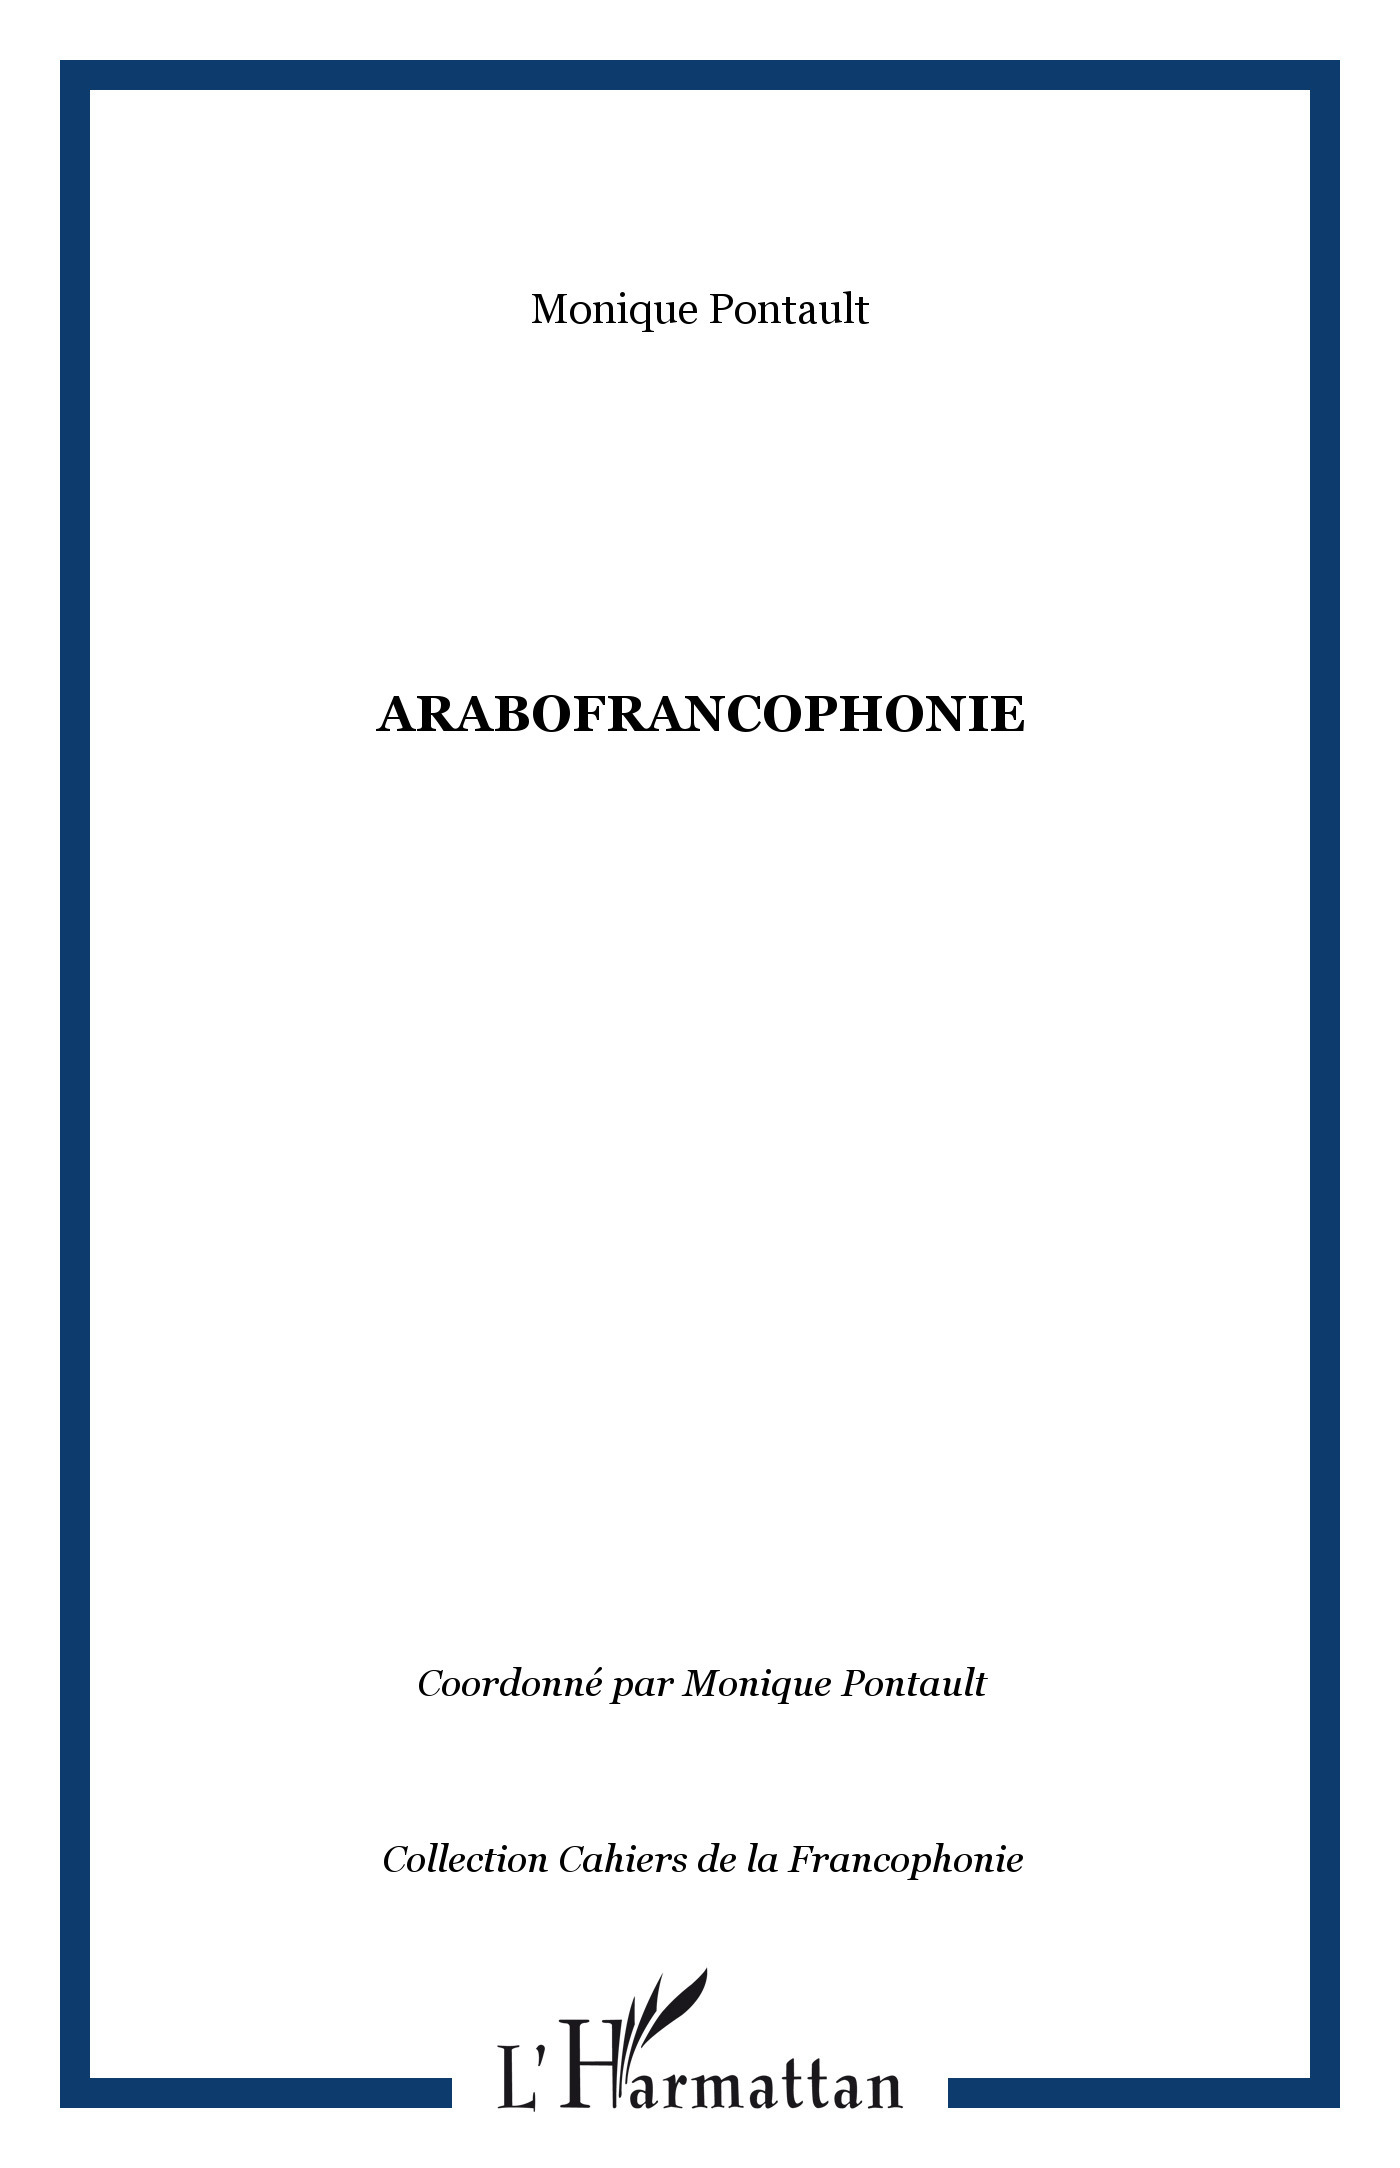 ARABOFRANCOPHONIE (9782747514651-front-cover)